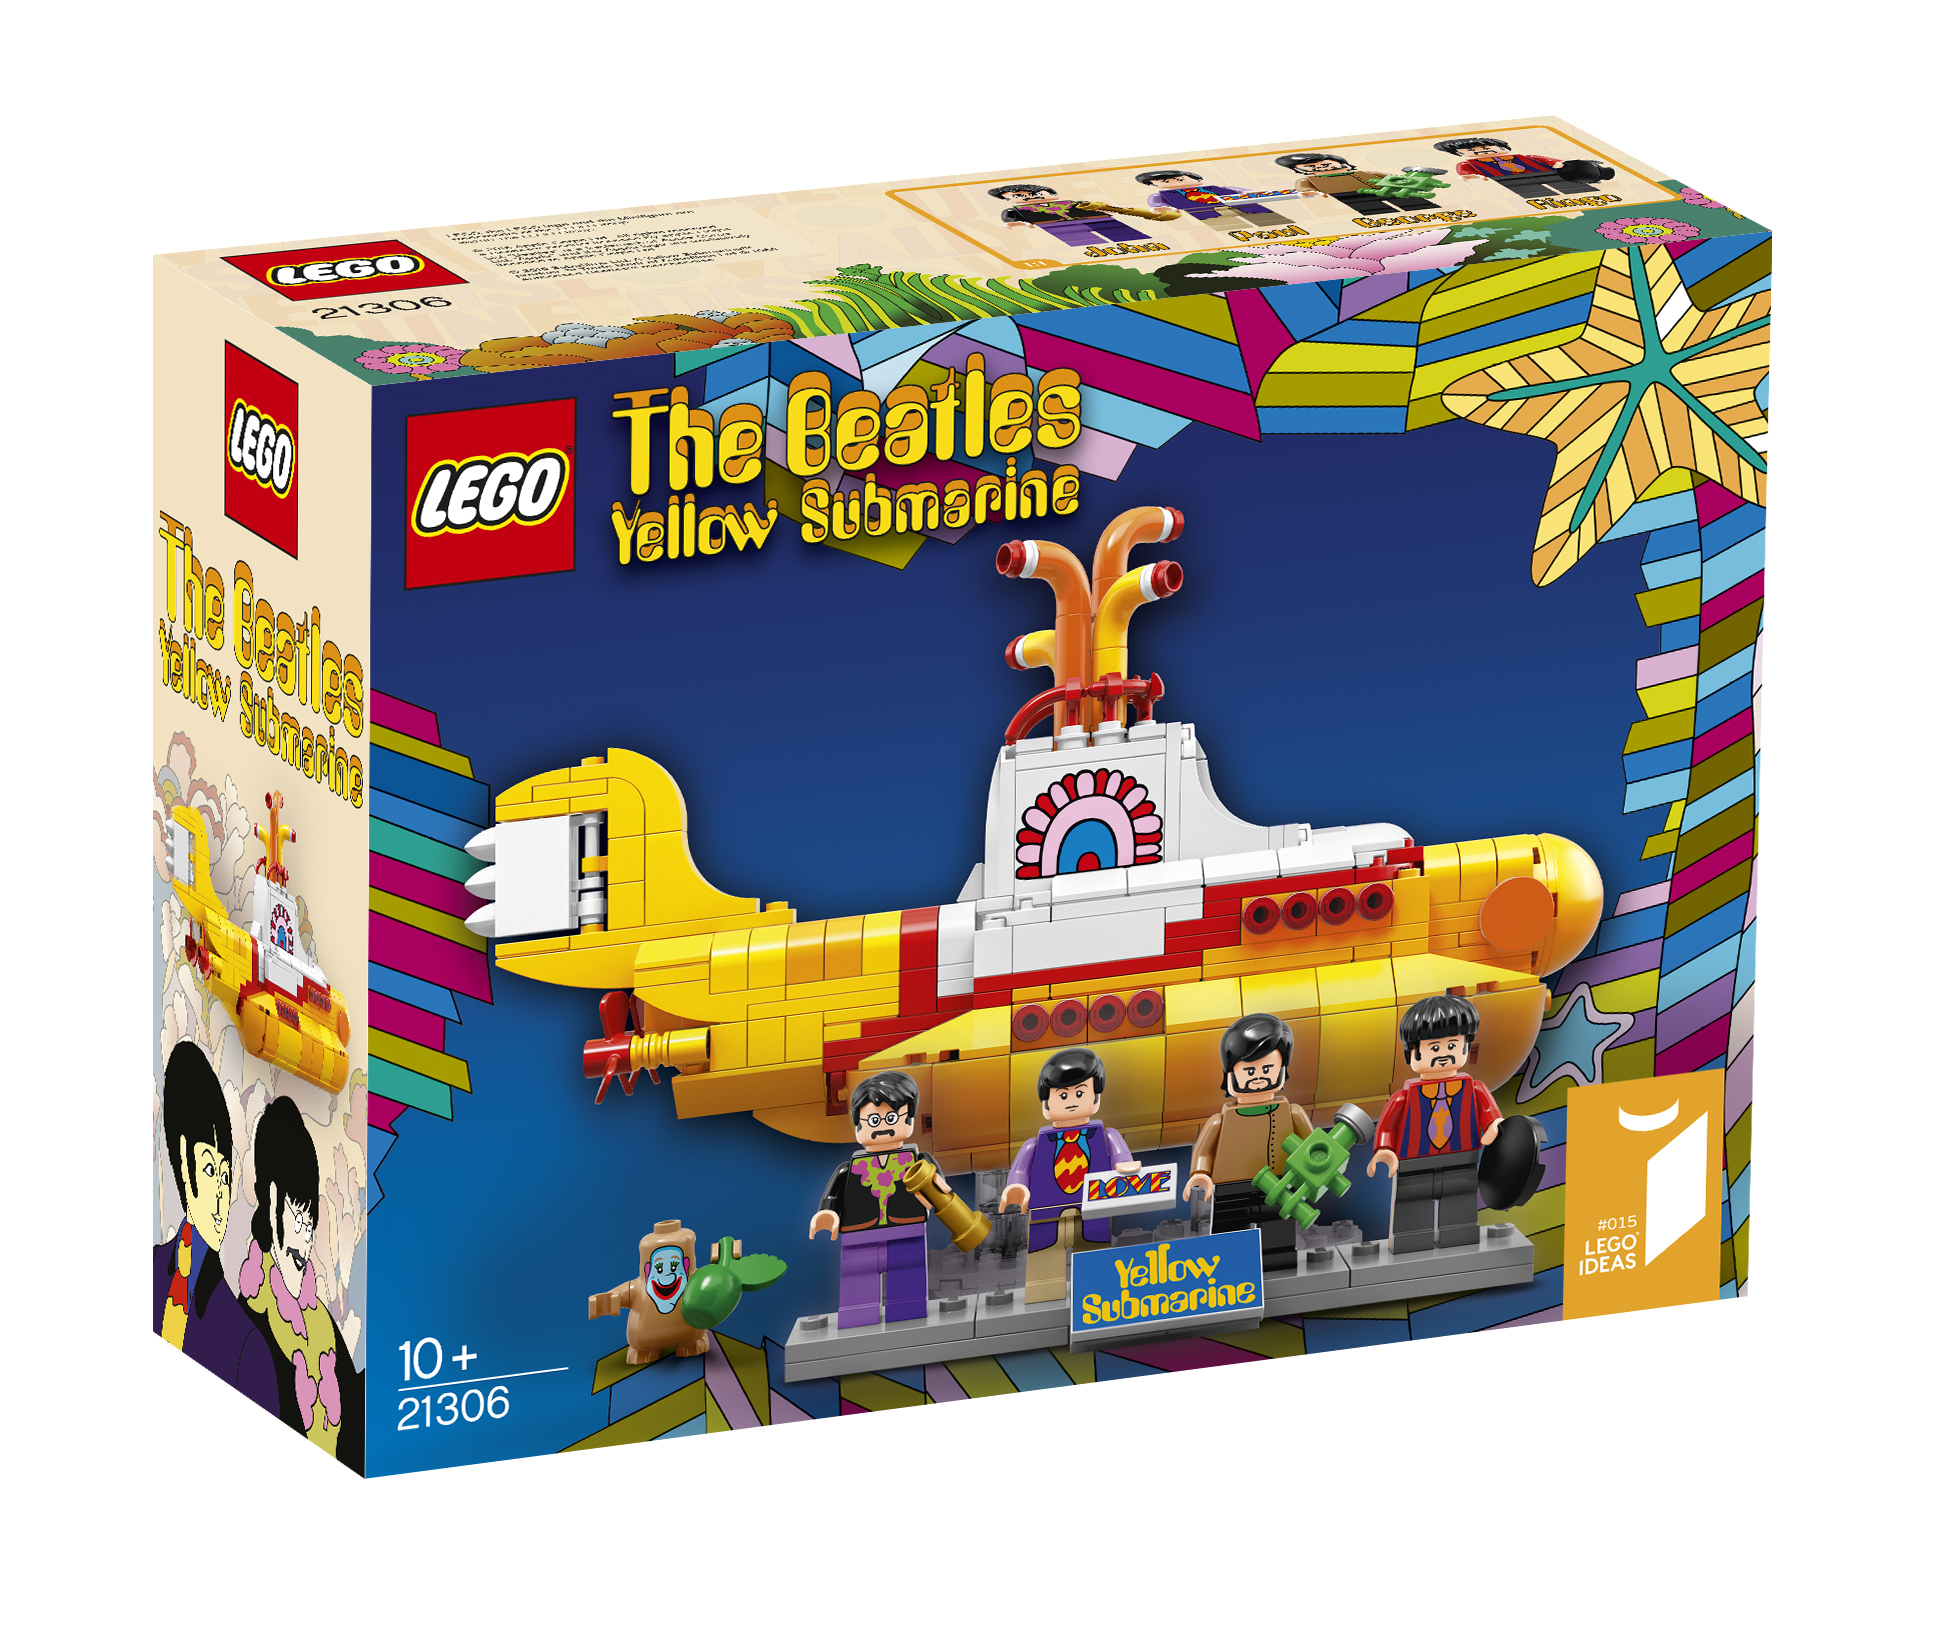 The Beatles MiniFigure LEGO Ideas Paul McCartney Yellow Submarine Set 21306